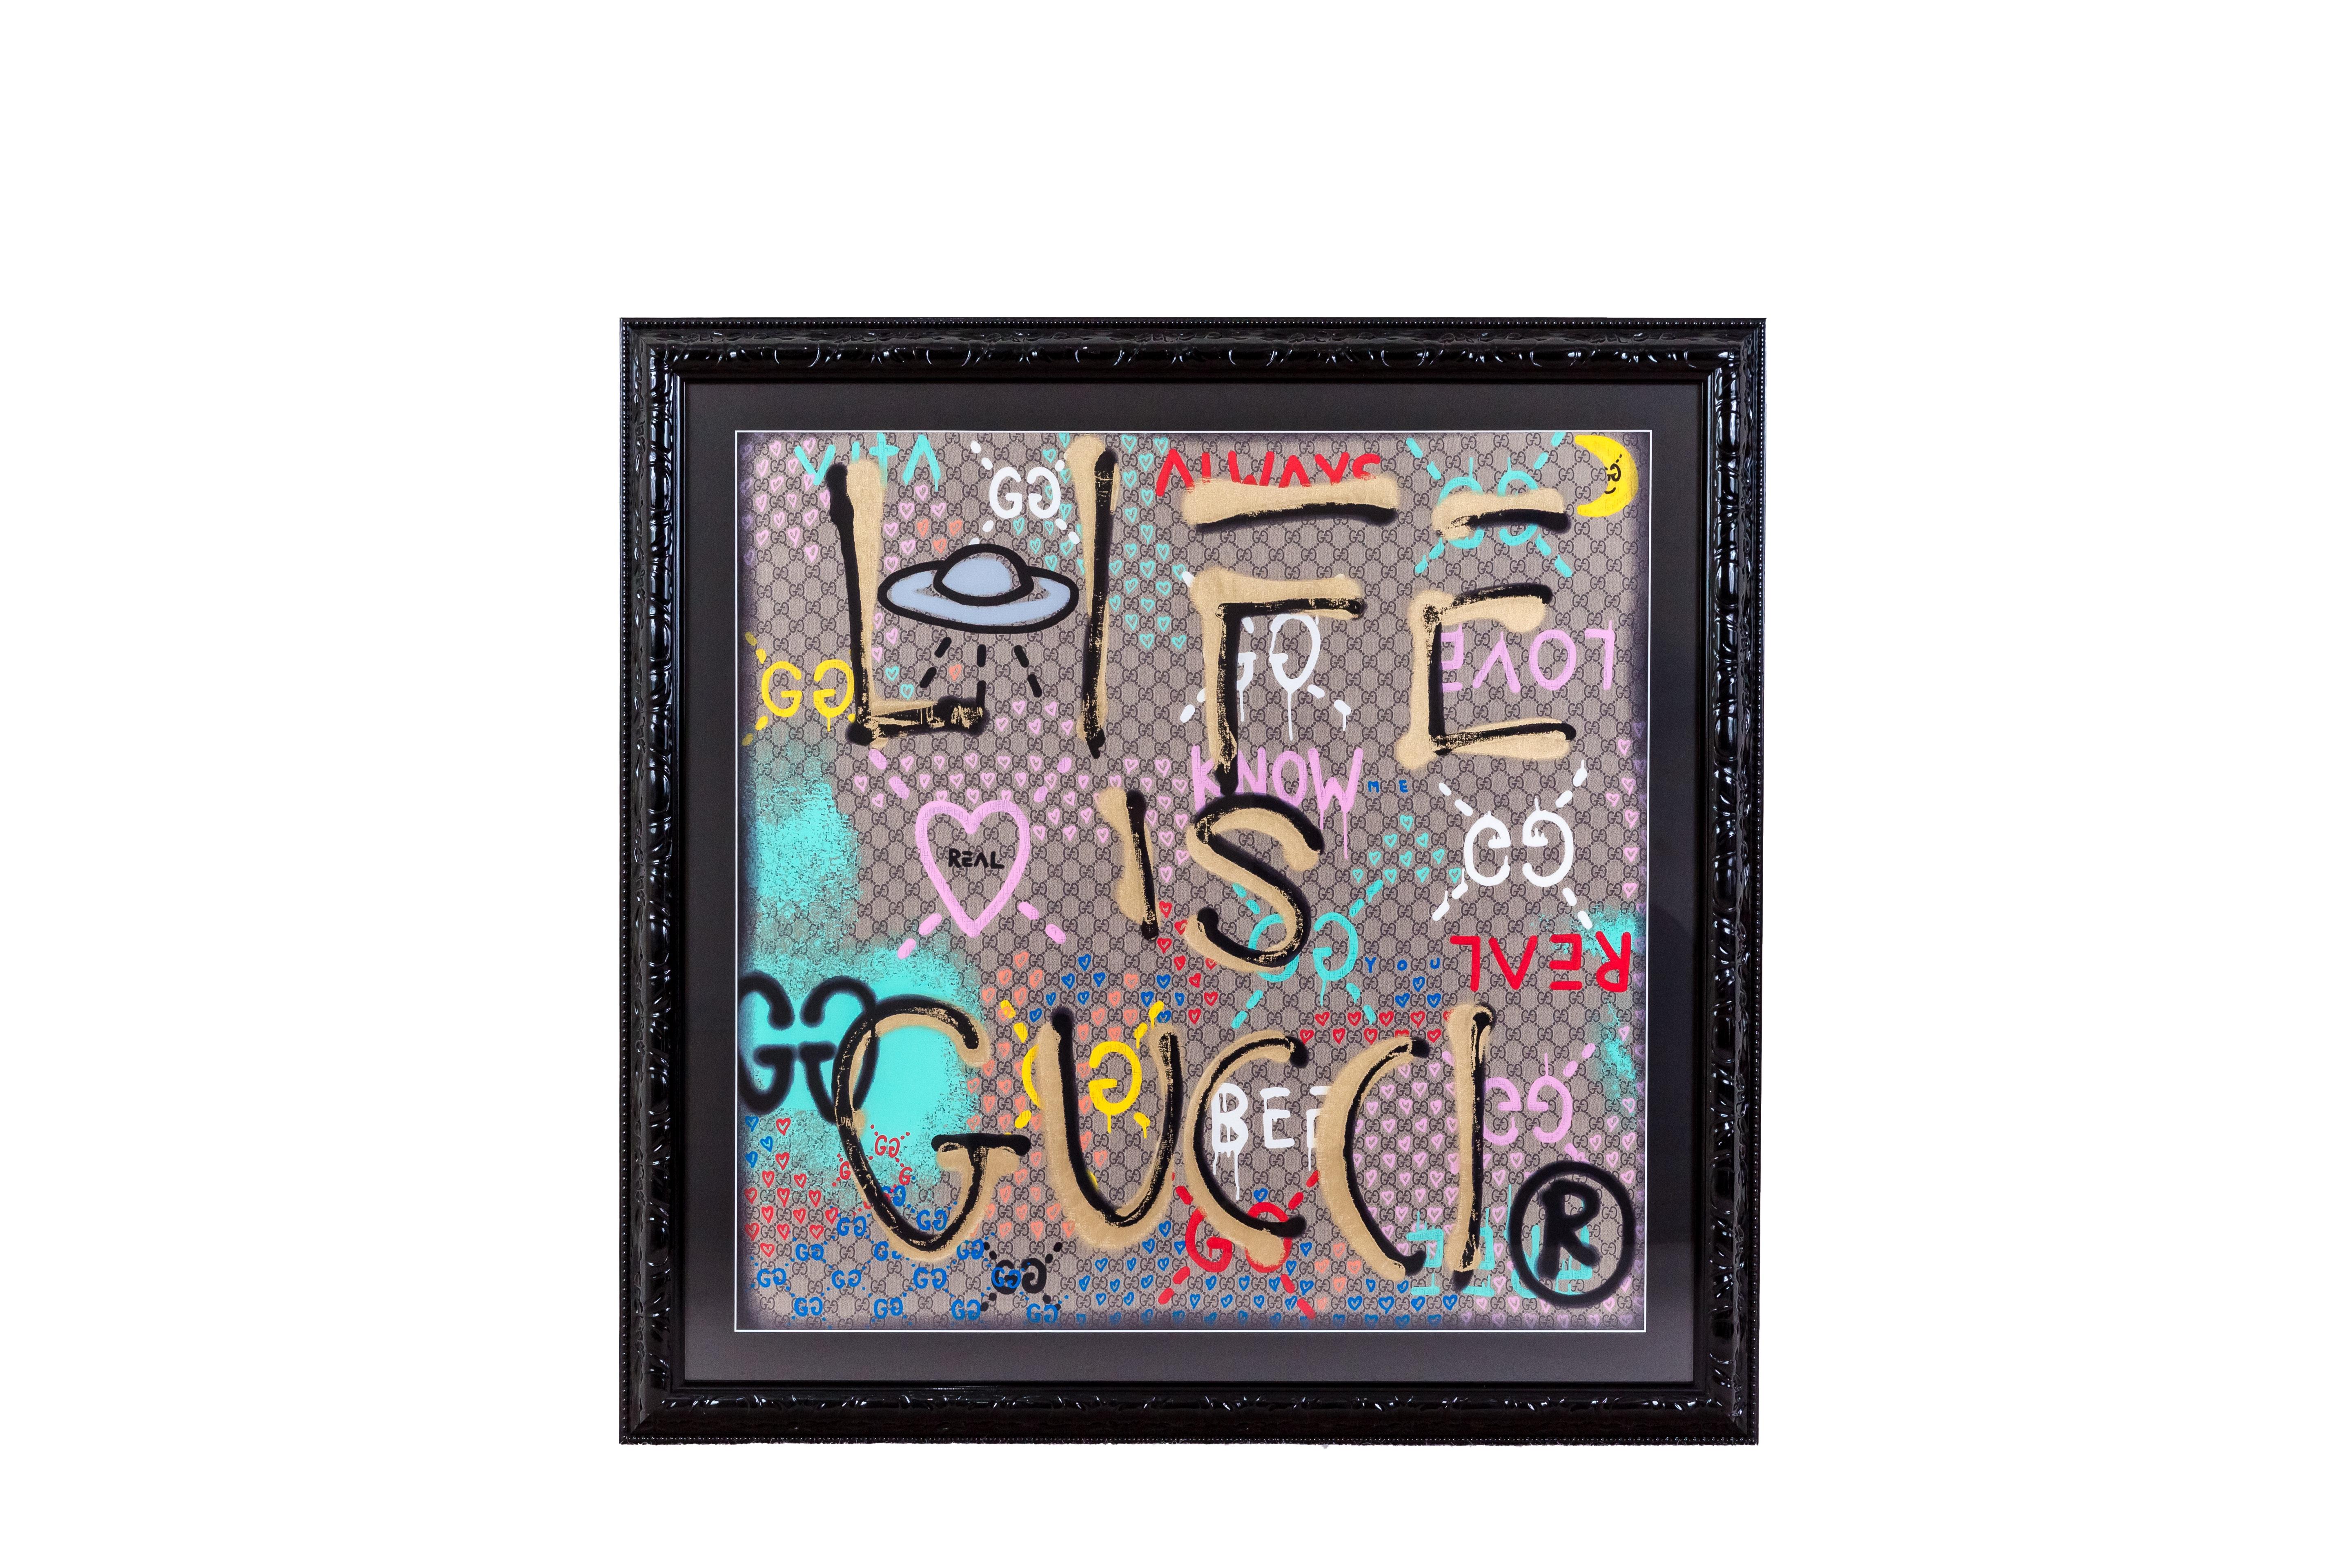 GUCCI - Life is Gucci - Logo - graffiti art - street art - gucci logo - abstract 3